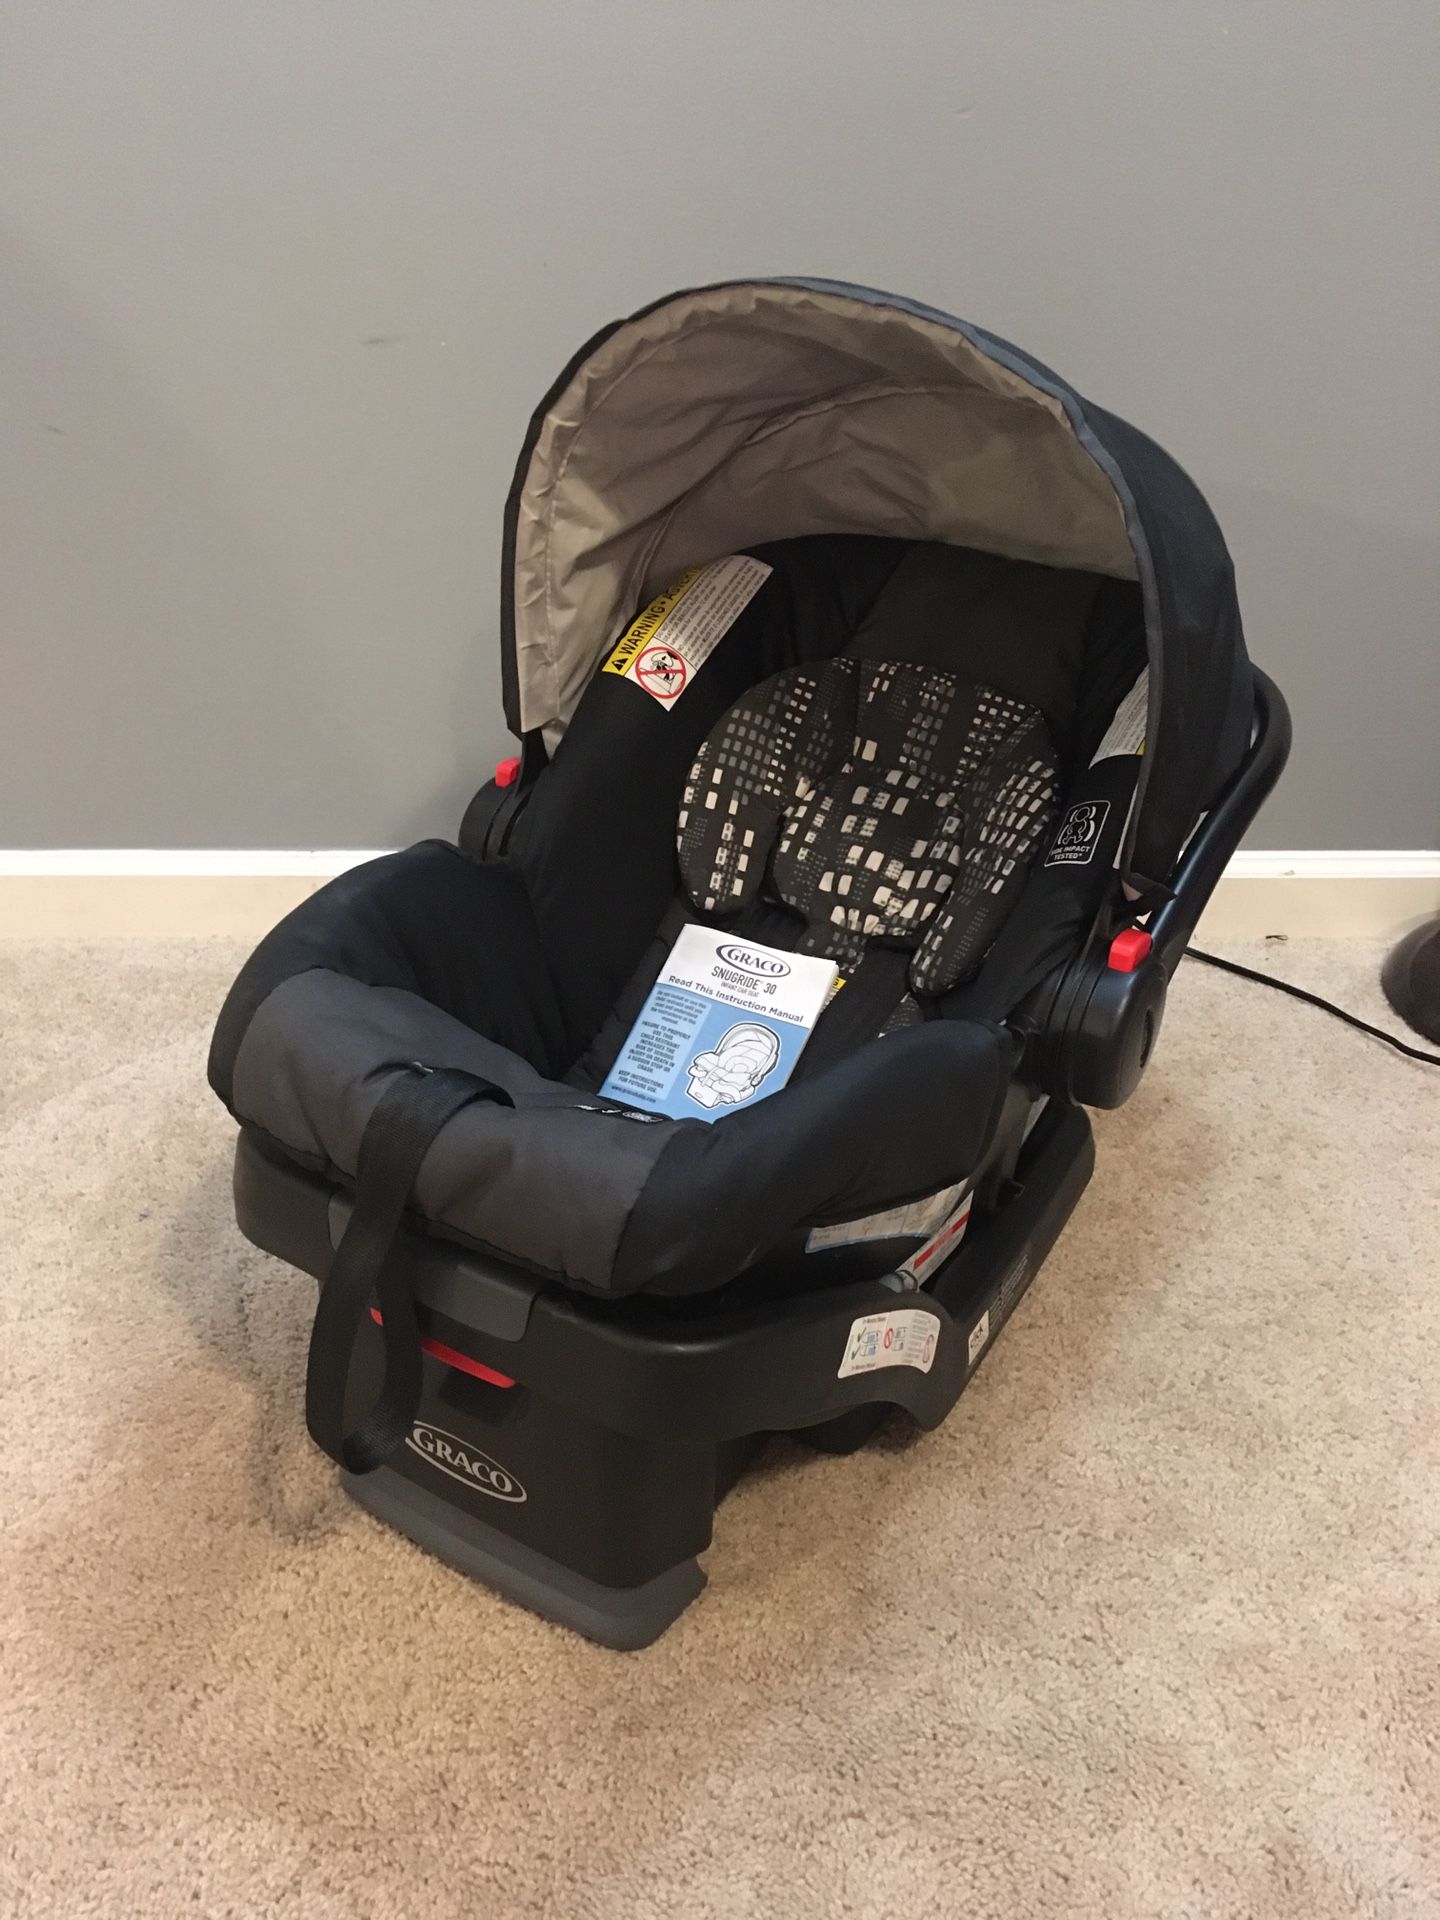 Graco infant Car seat